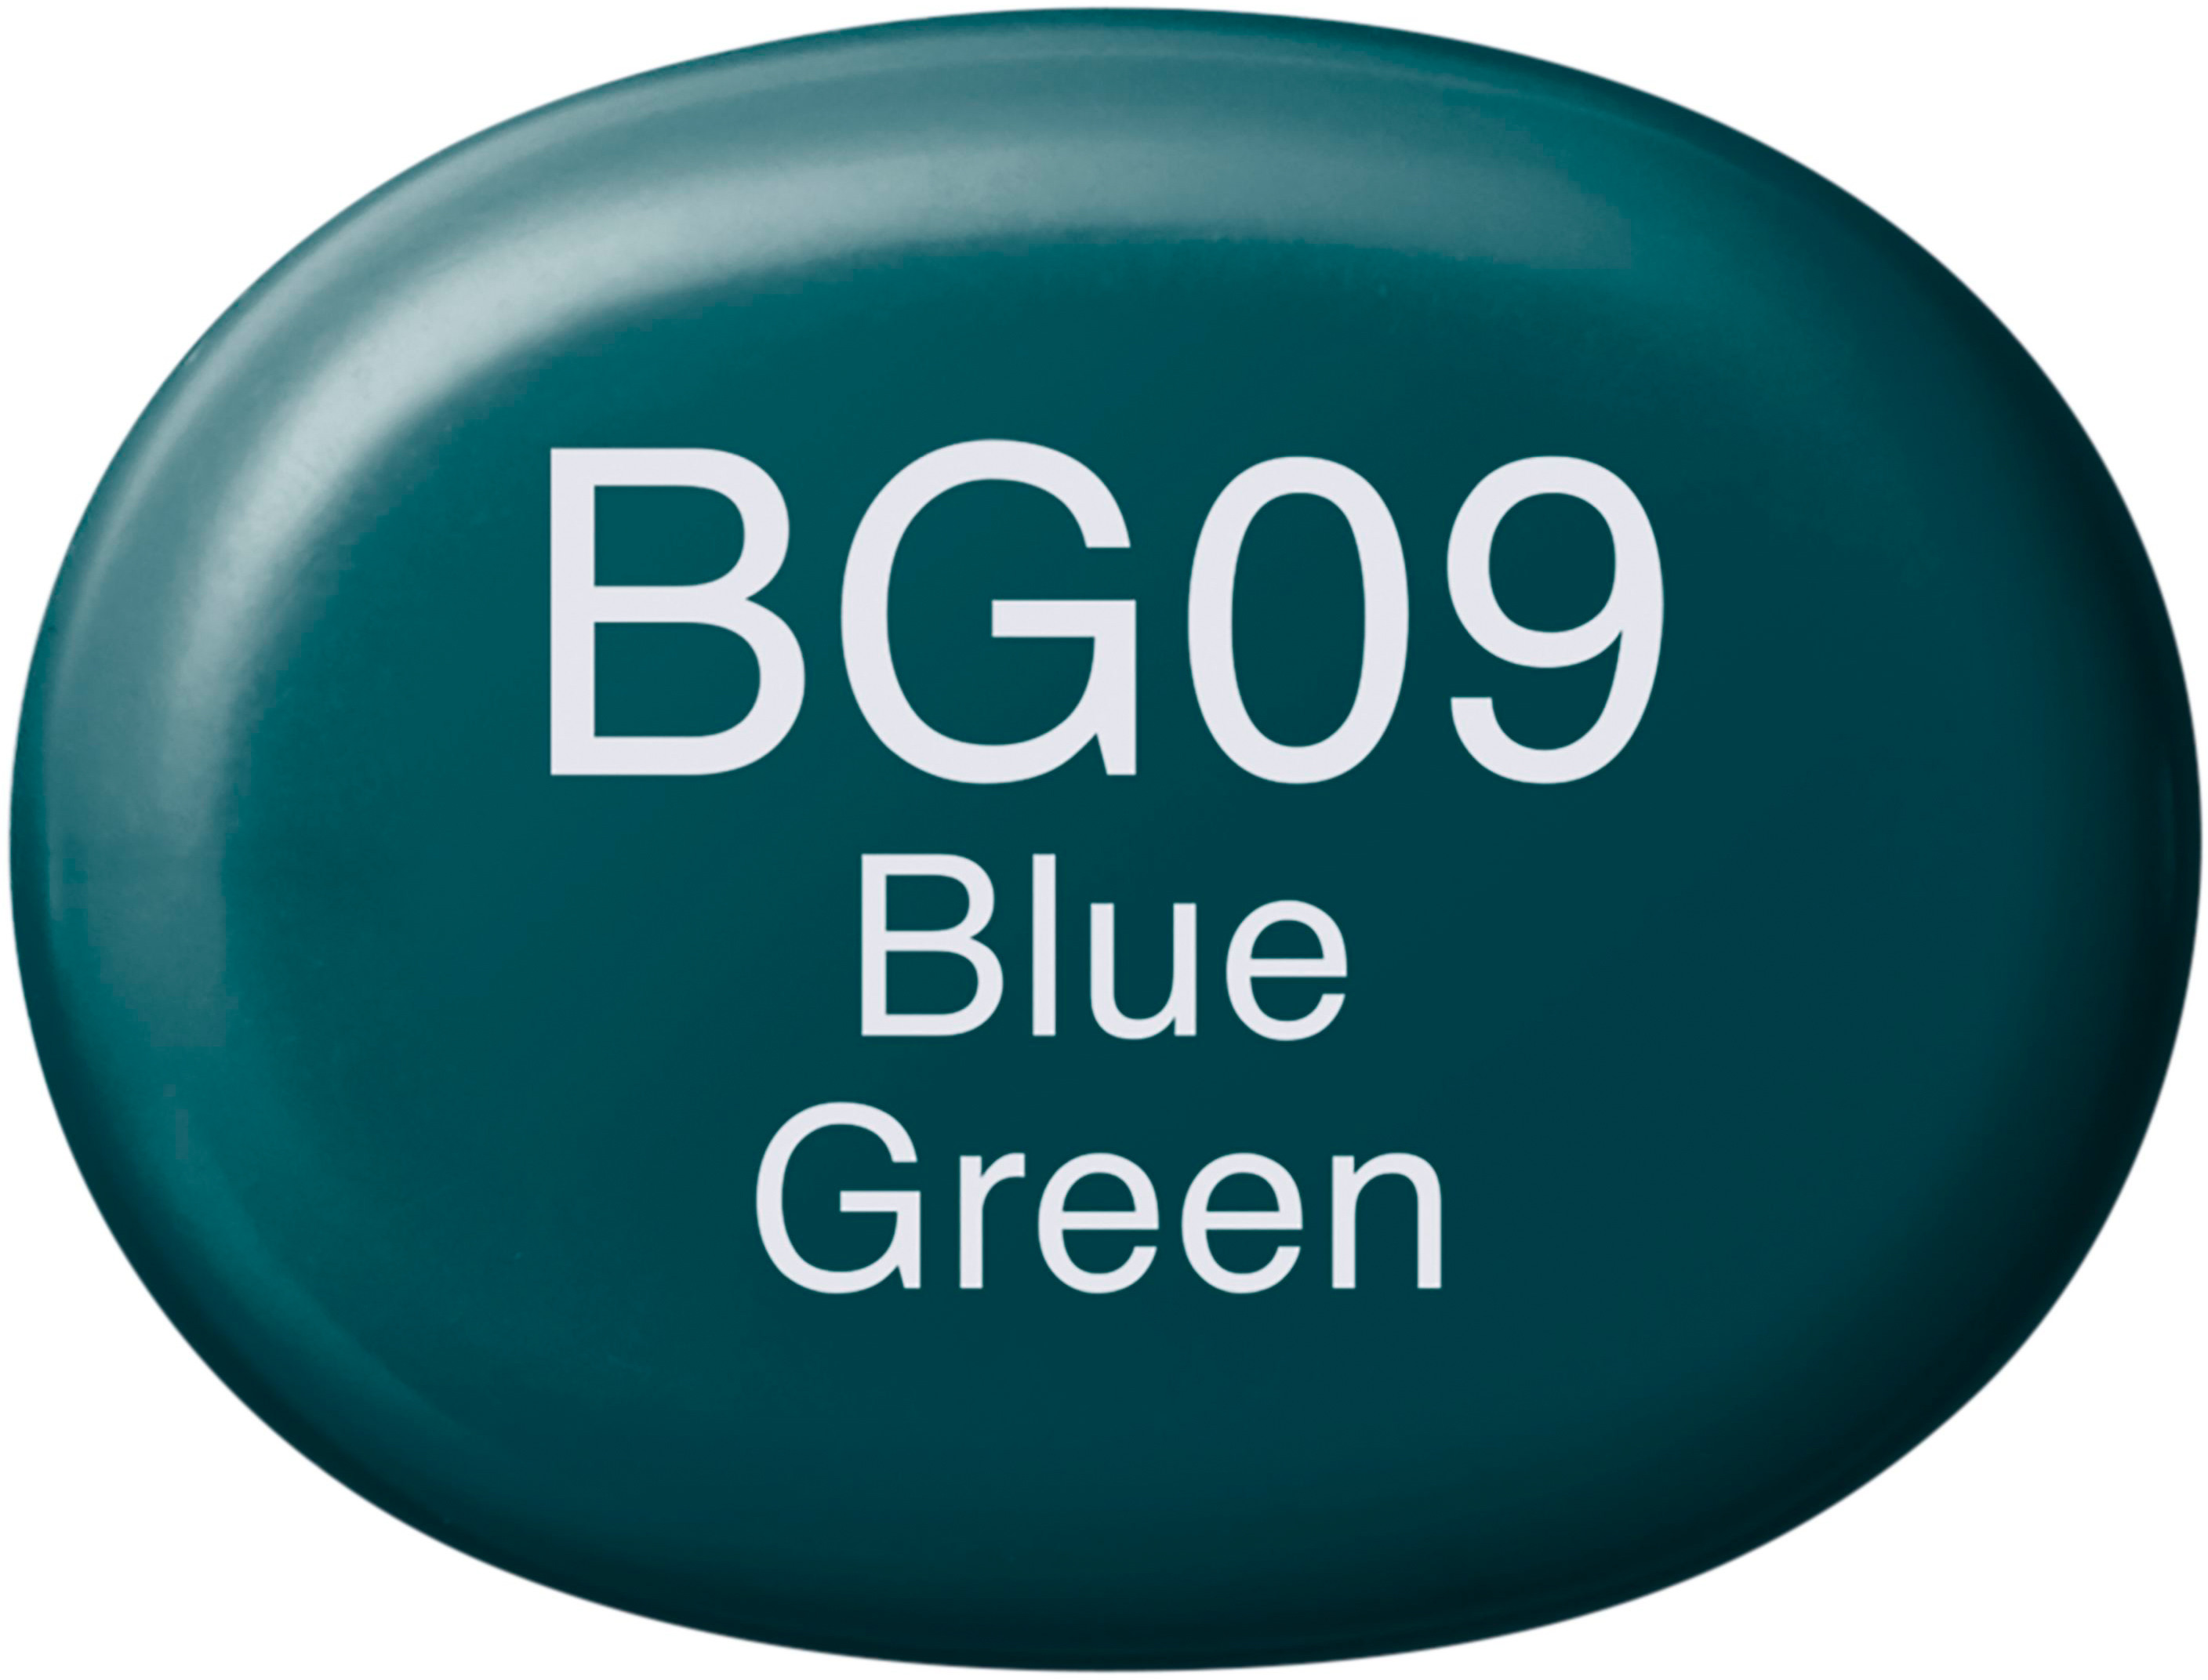 COPIC Marker Sketch 2107536 BG09 - Blue Green